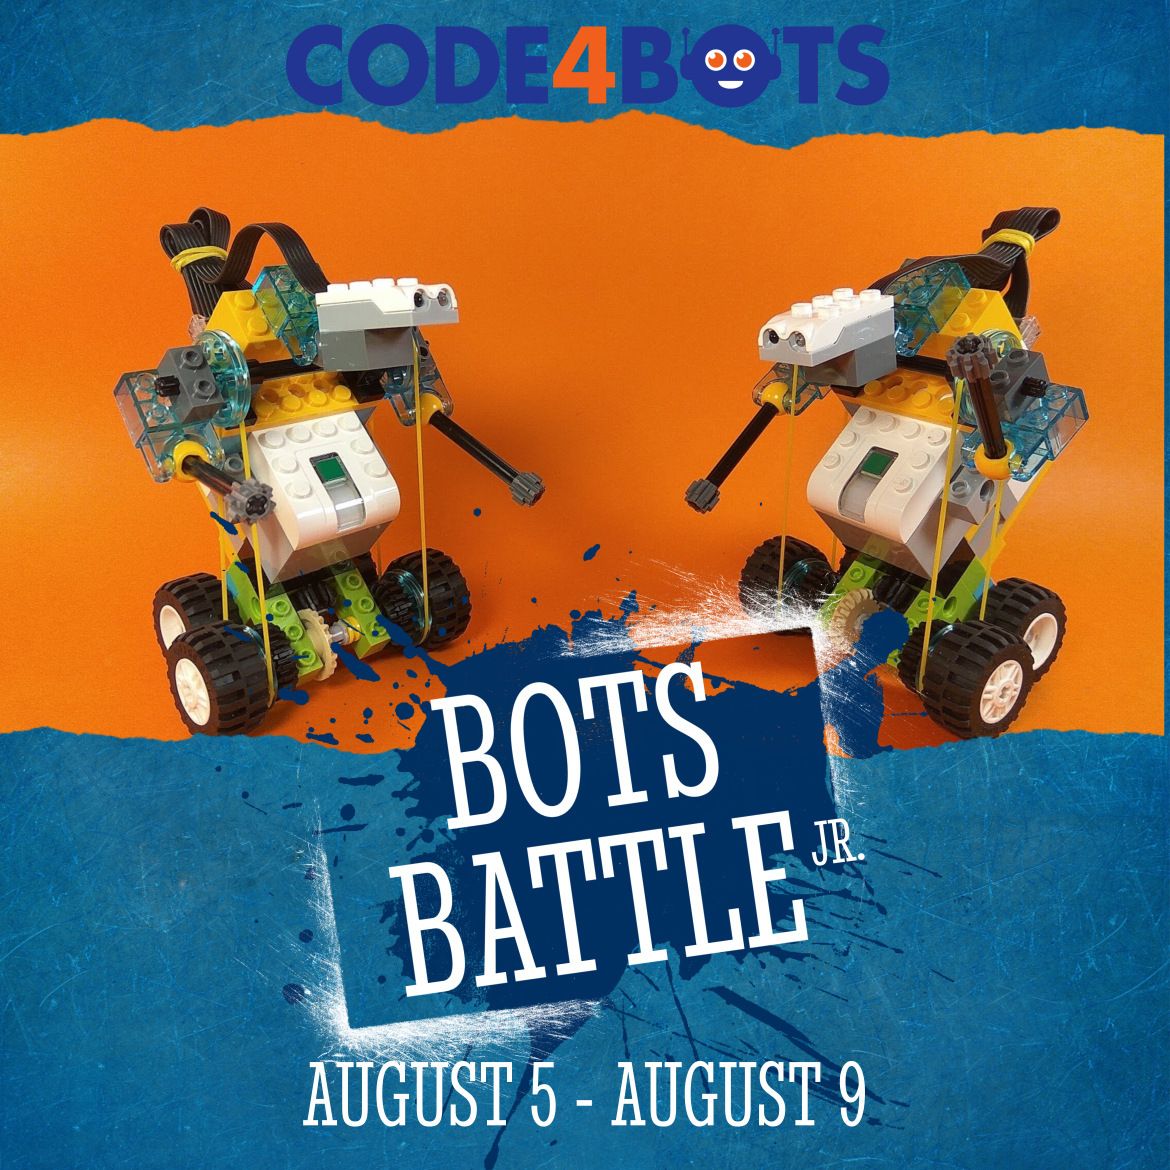 Code4Bots Bot Battles Jr. Full-Day Summer Camp